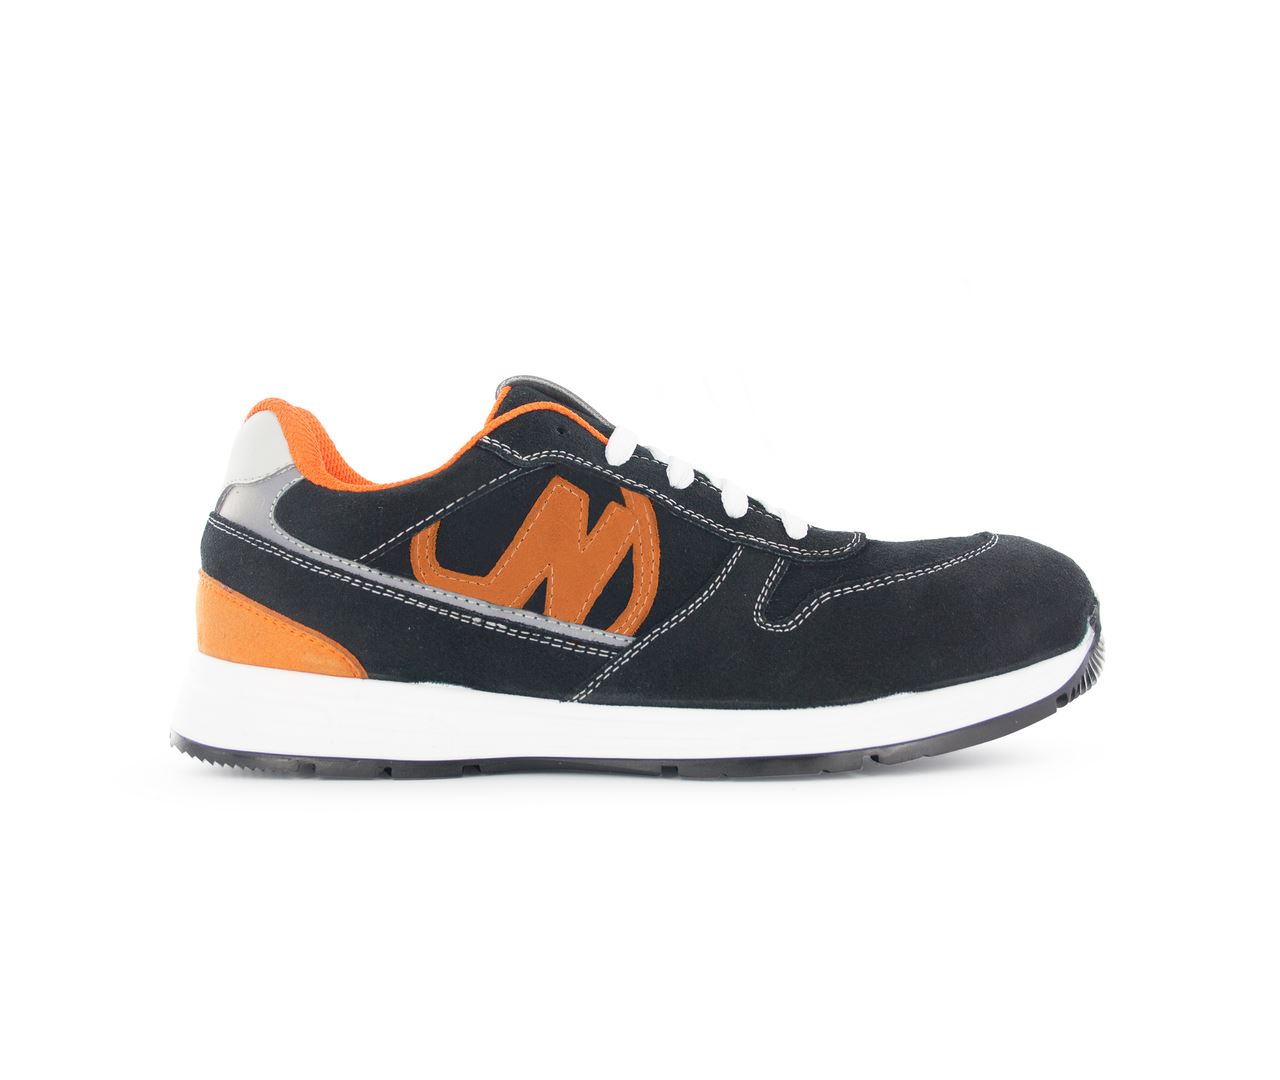 Chaussure de sécurité noir/orange Run Soft T.46 - Nord'Ways - RUN000346000NOOR